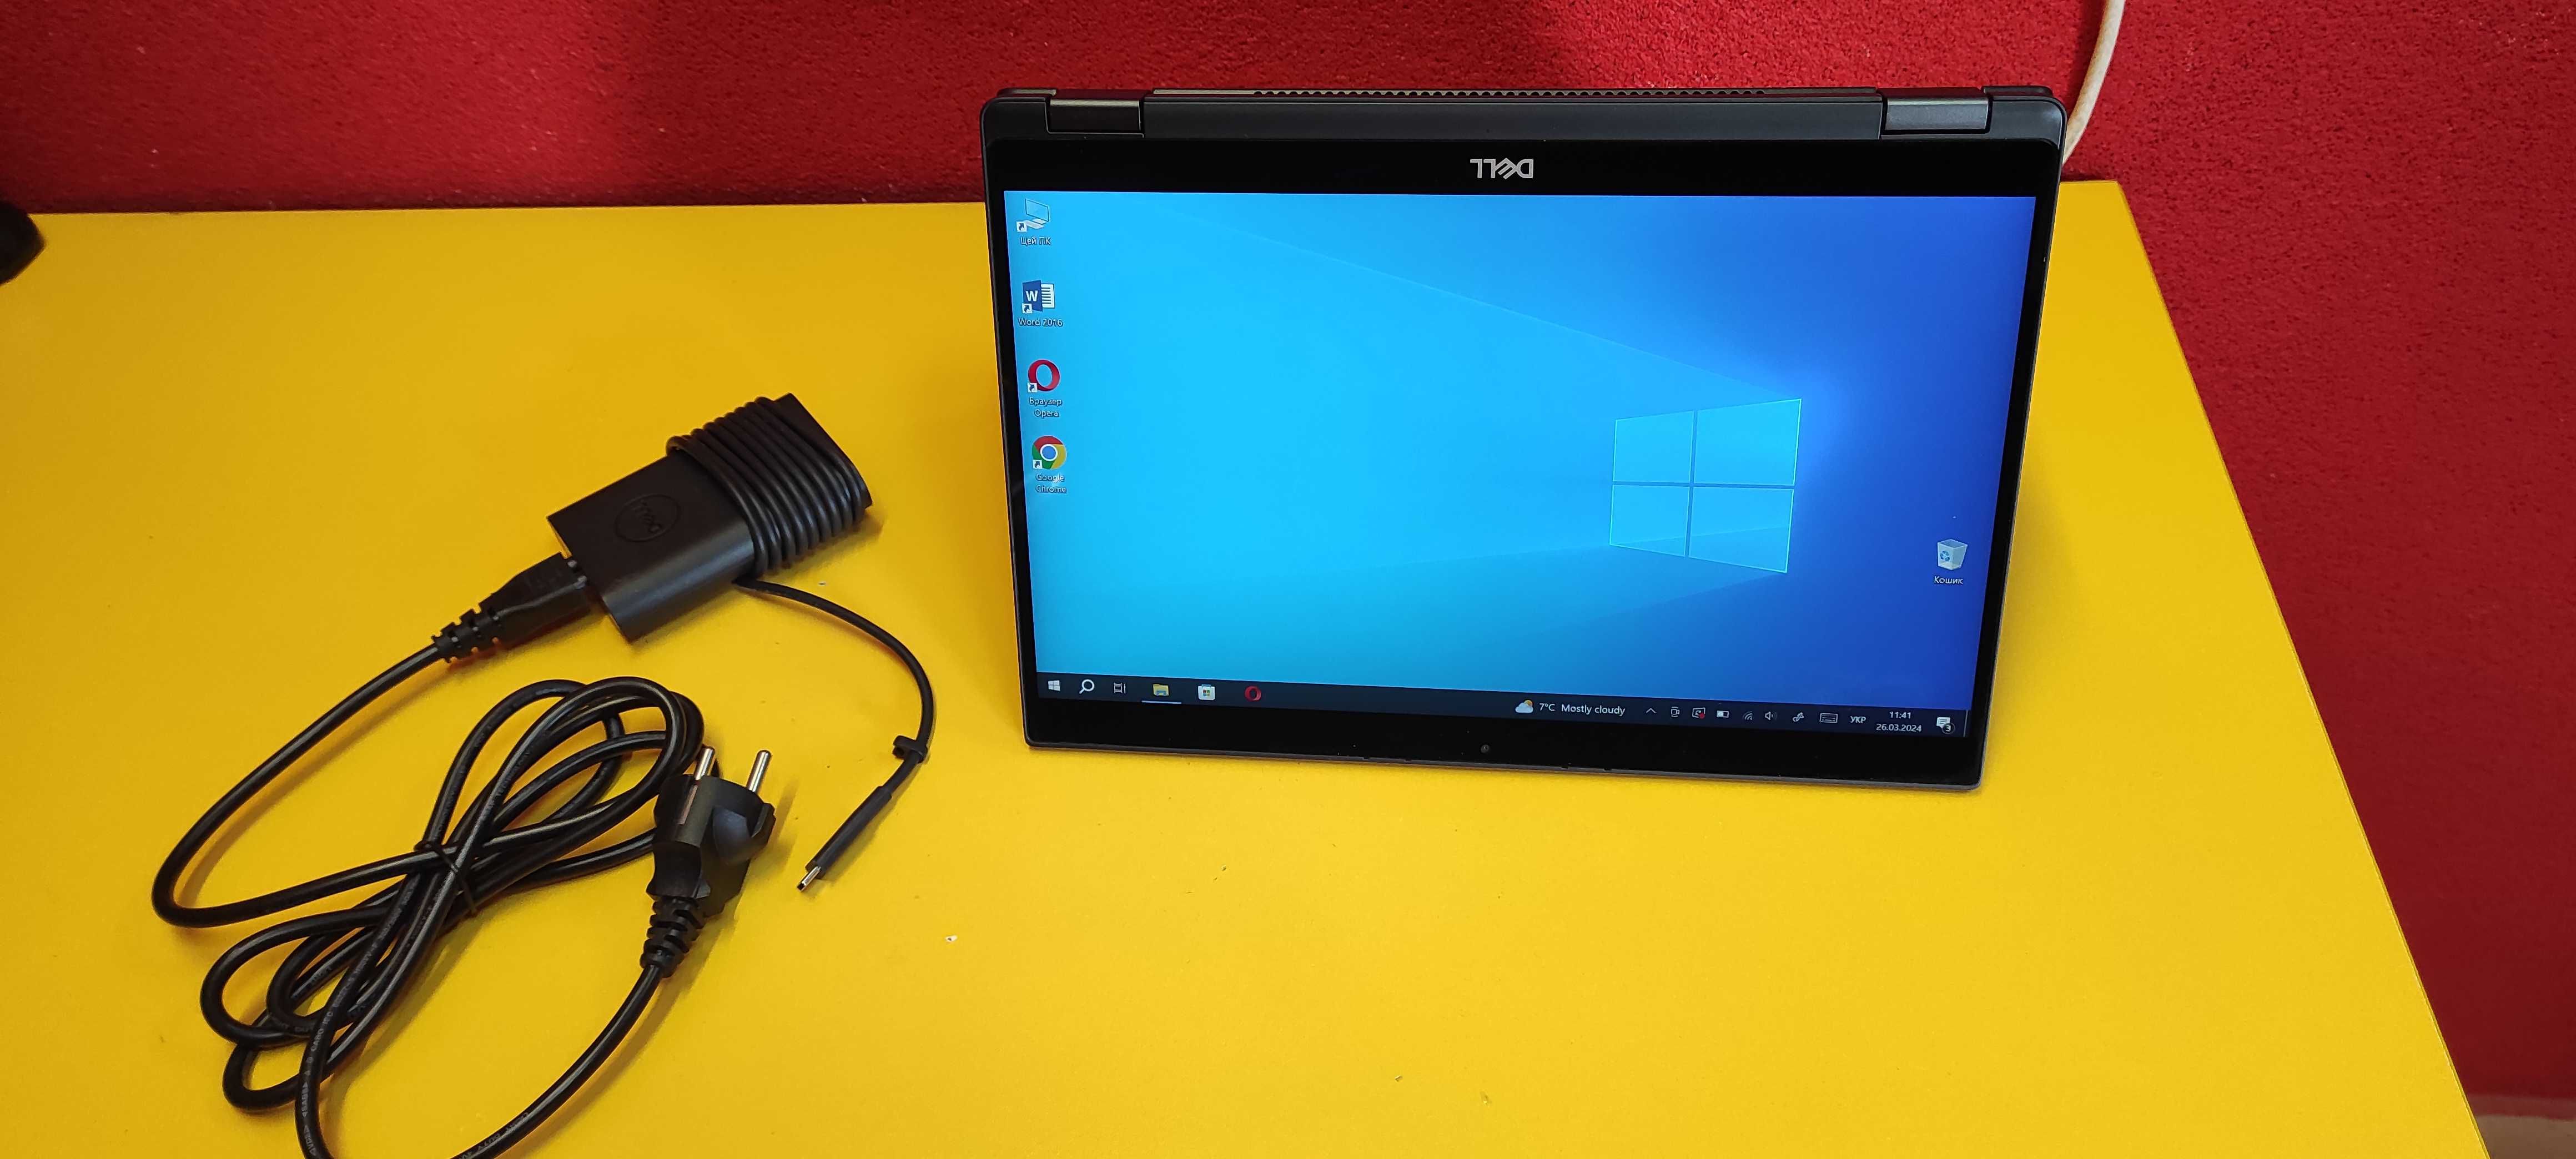 Ноутбук- планшет Dell 7390 2in1 (intel i5,8/256GB)